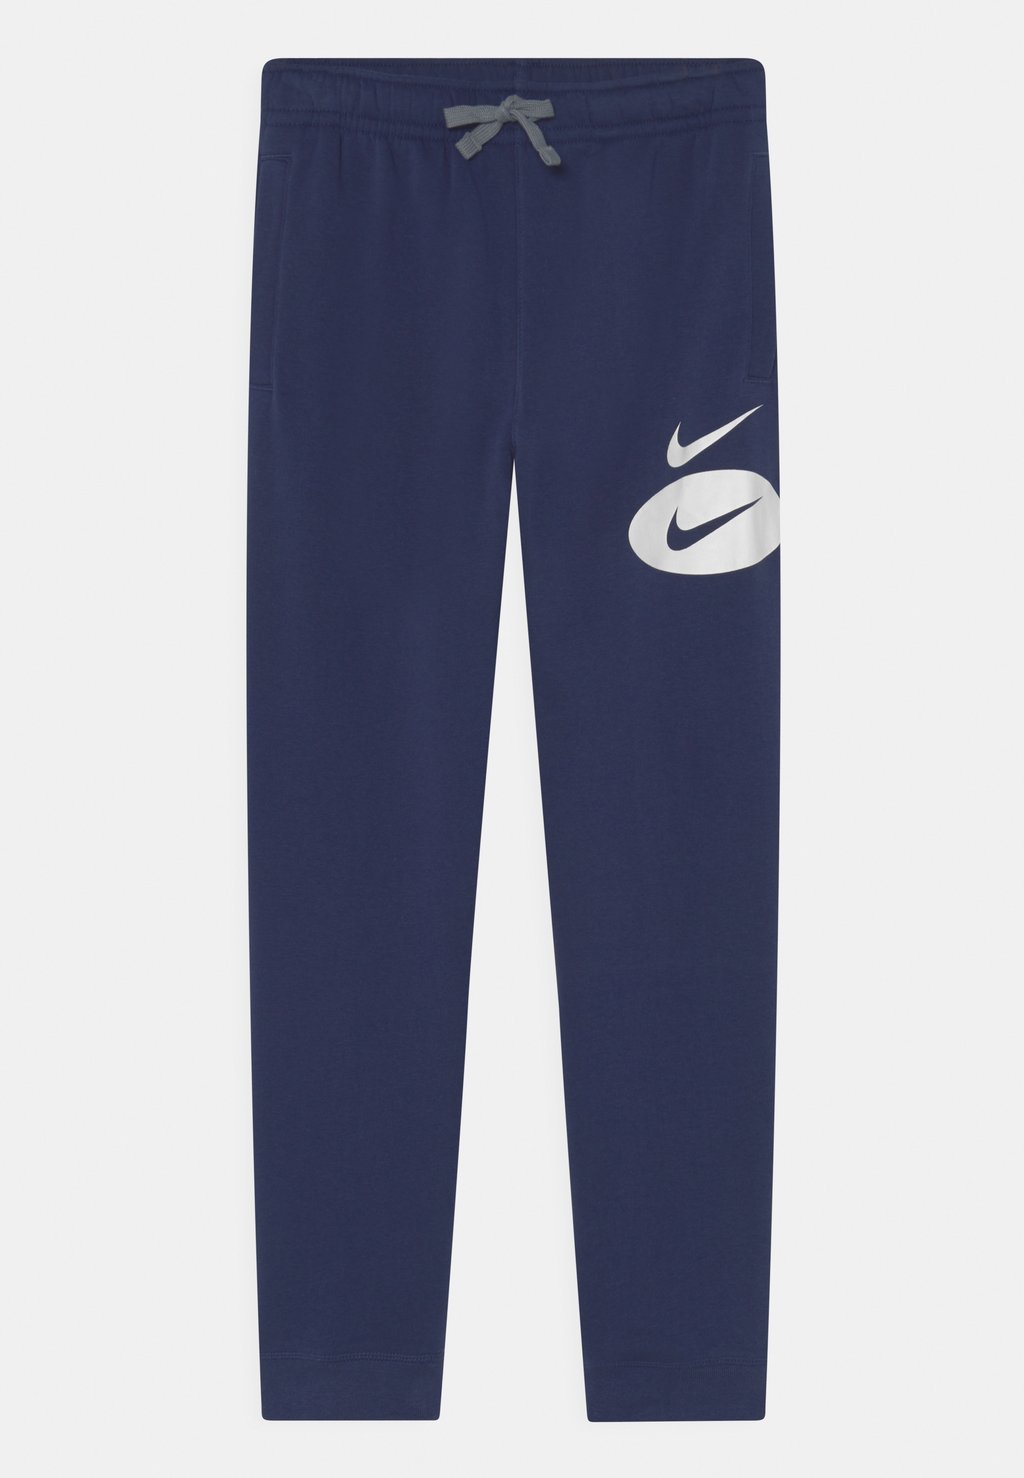 Спортивные штаны CORE Nike Sportswear, темно-синий спортивные штаны nike jordan flight темно синий серый